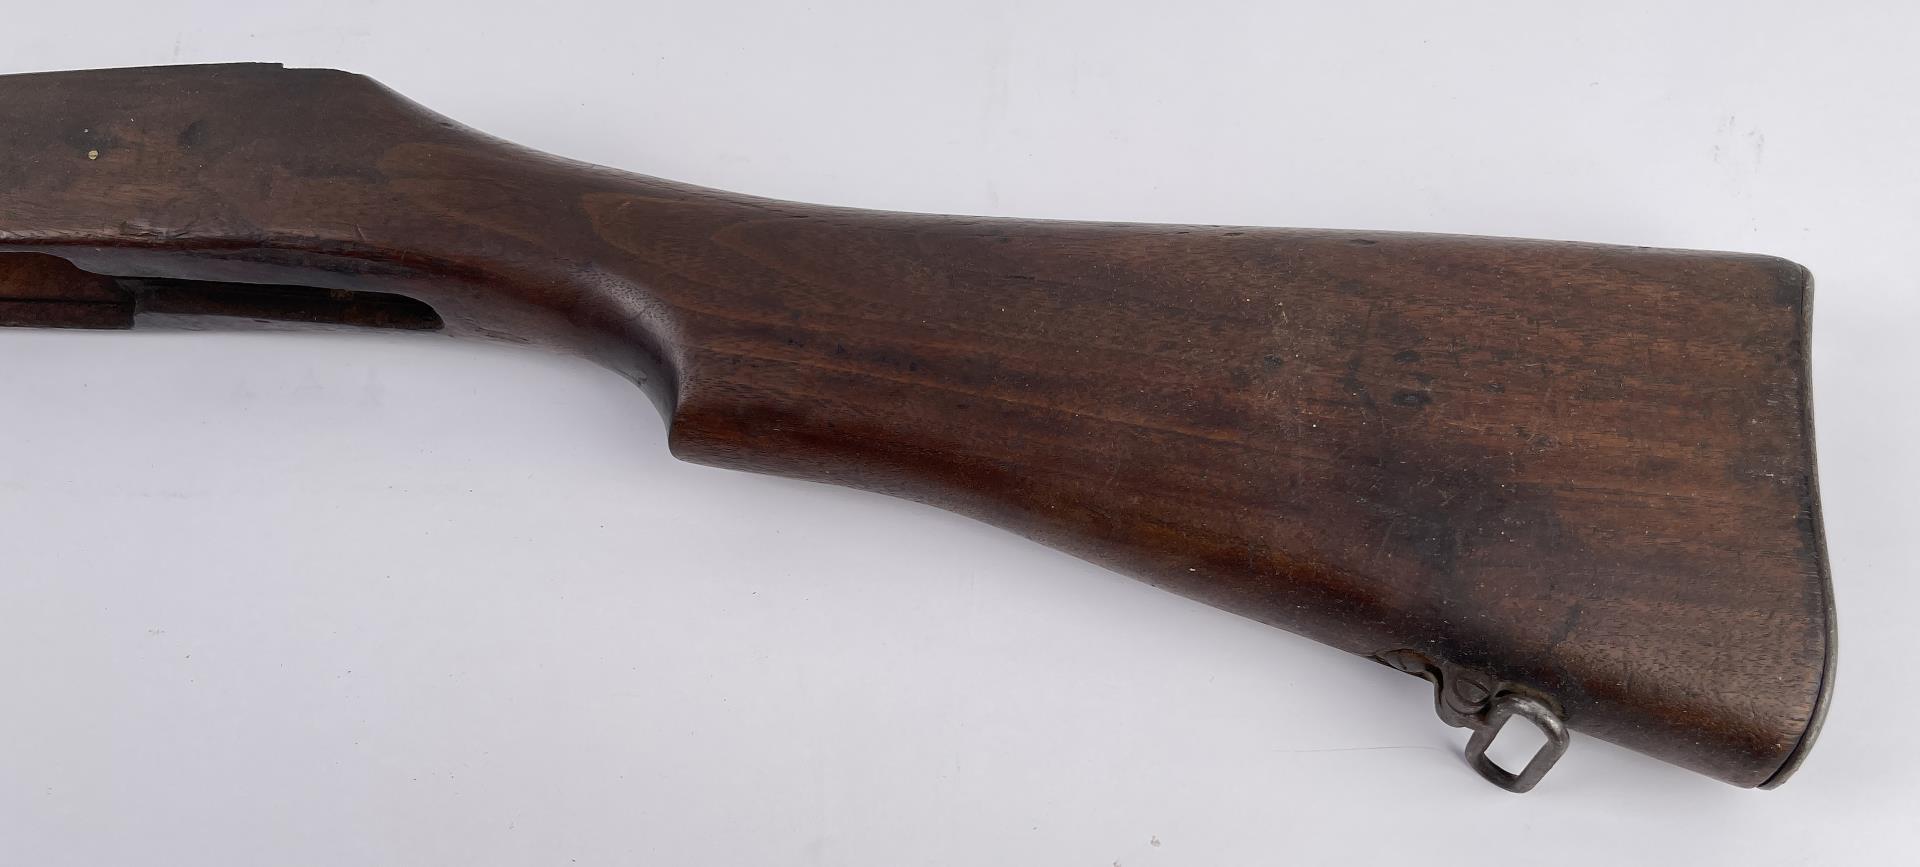 M1 Garand Wood Rifle Stock